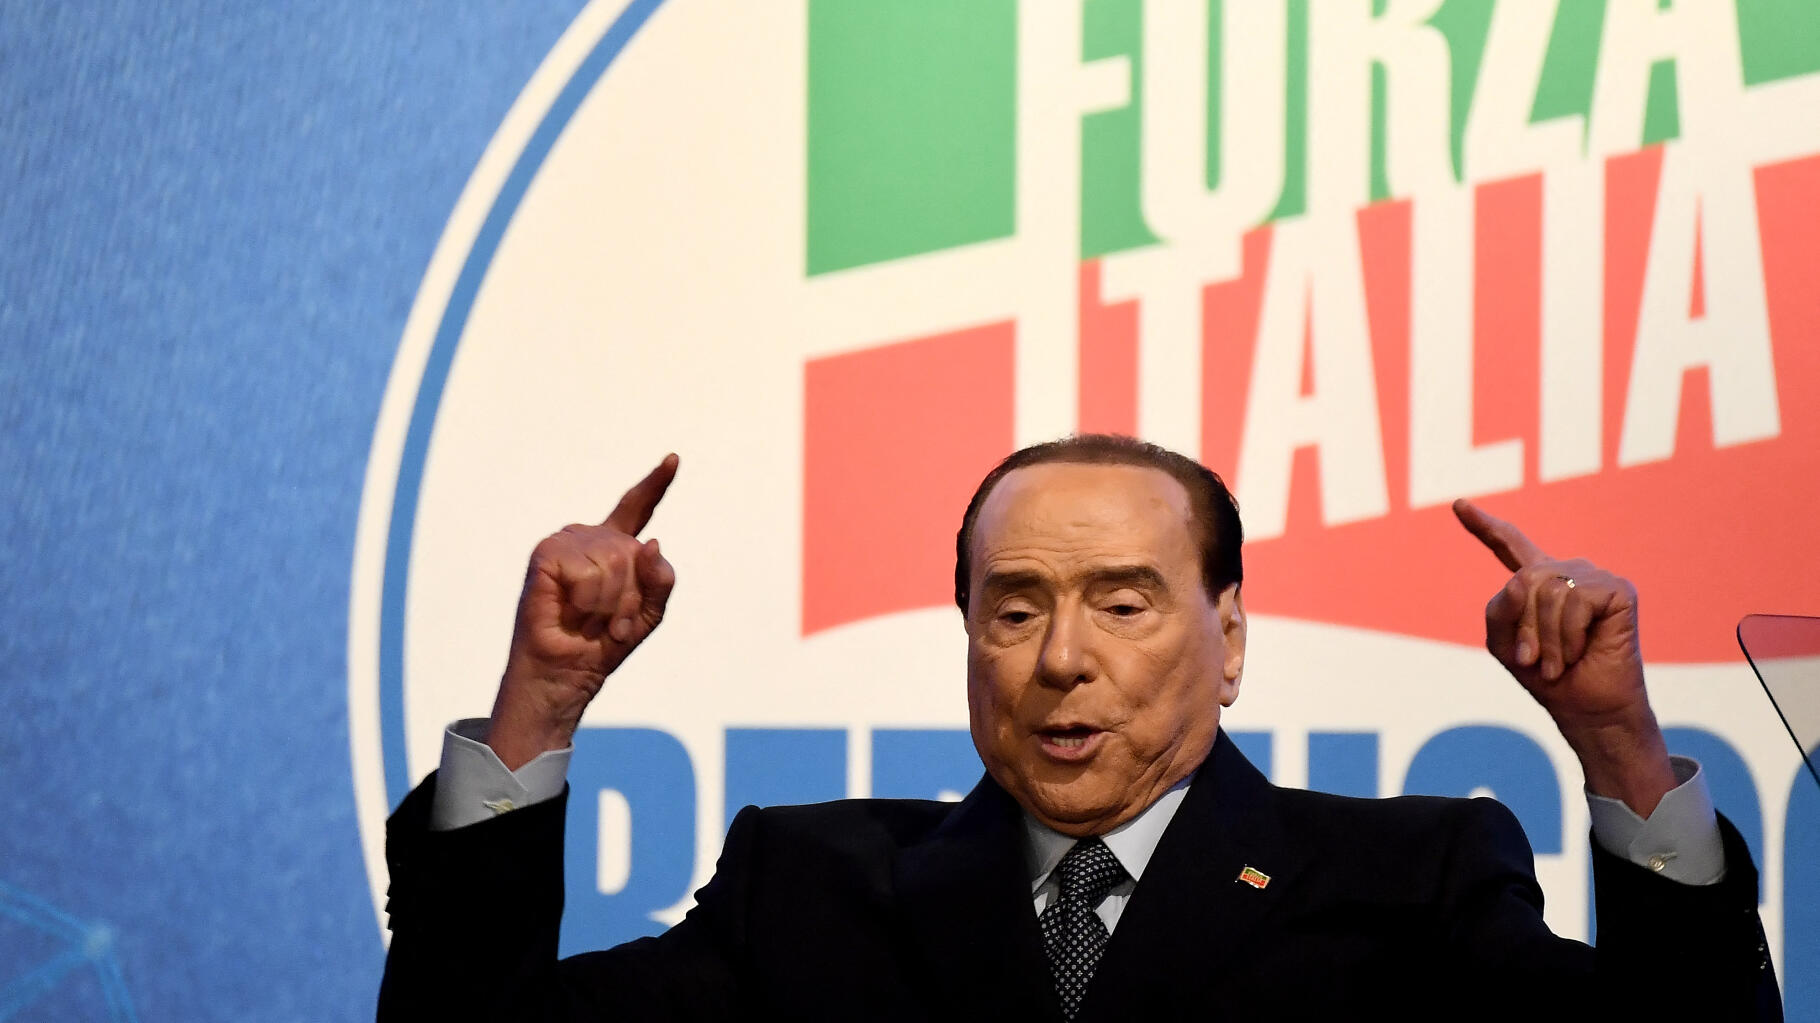 Silvio Berlusconi is suffering from leukemia